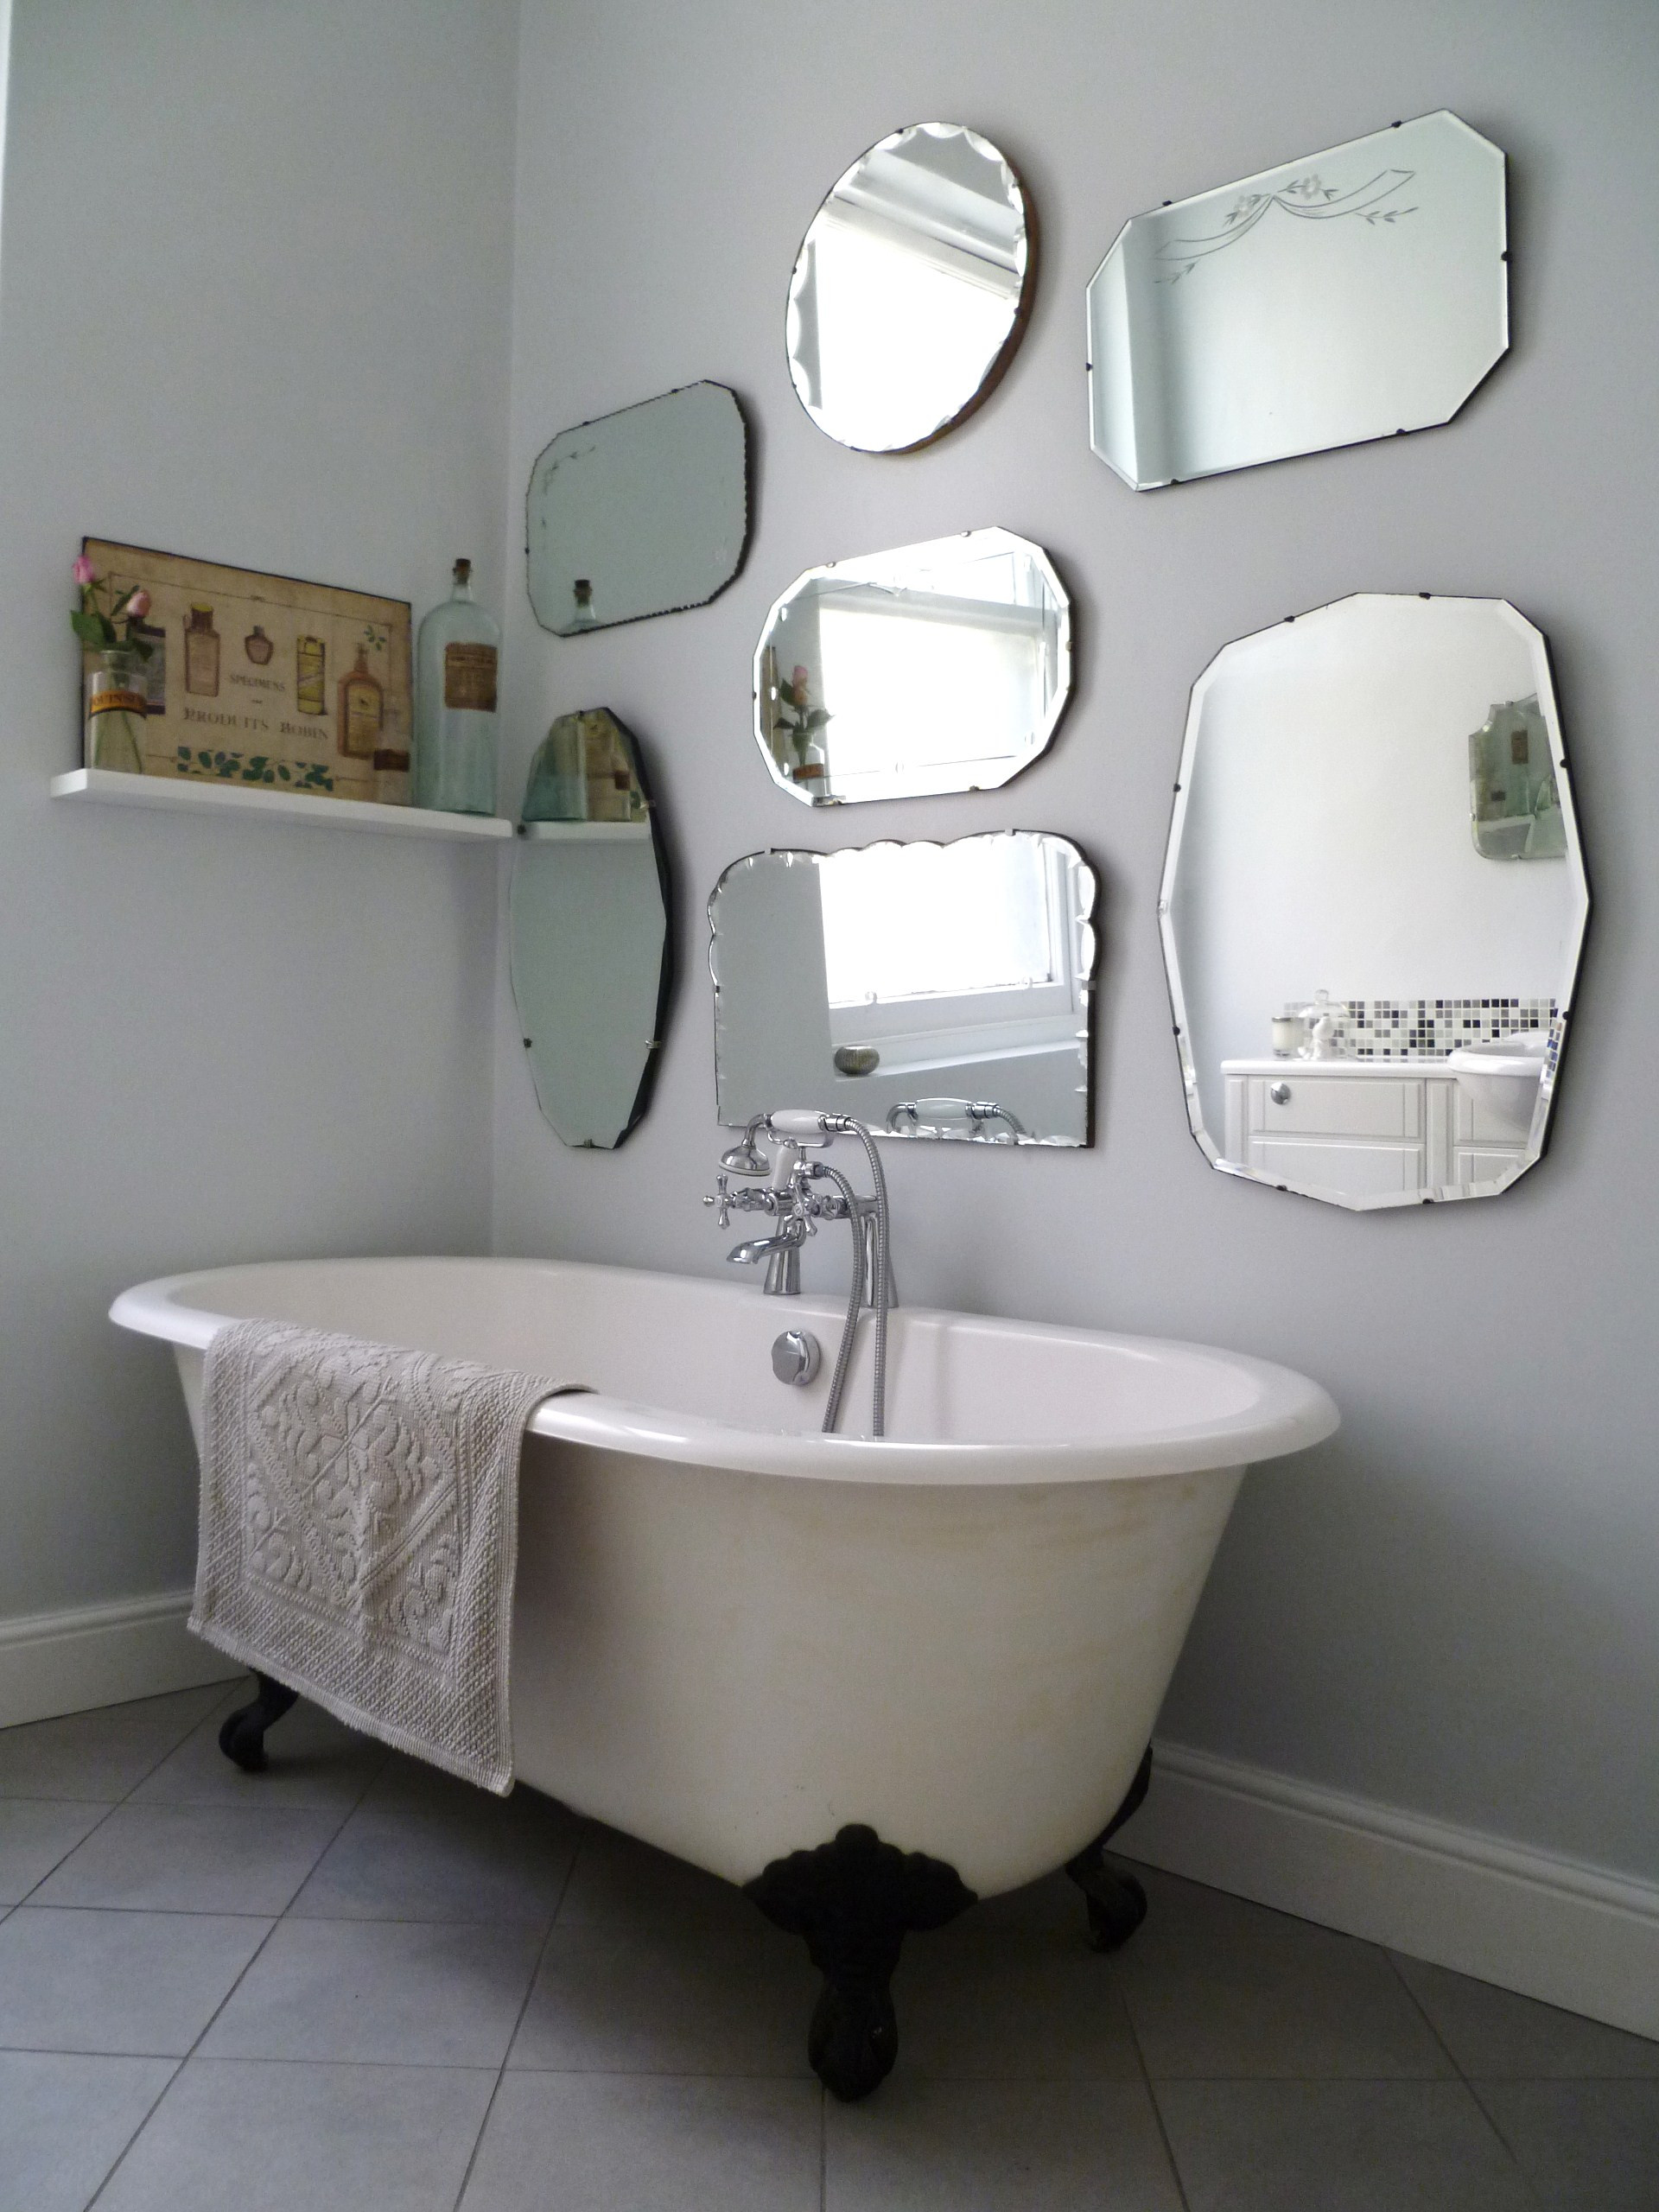 Retro Bathroom Mirror
 How to hang a display of vintage mirrors Decorator s